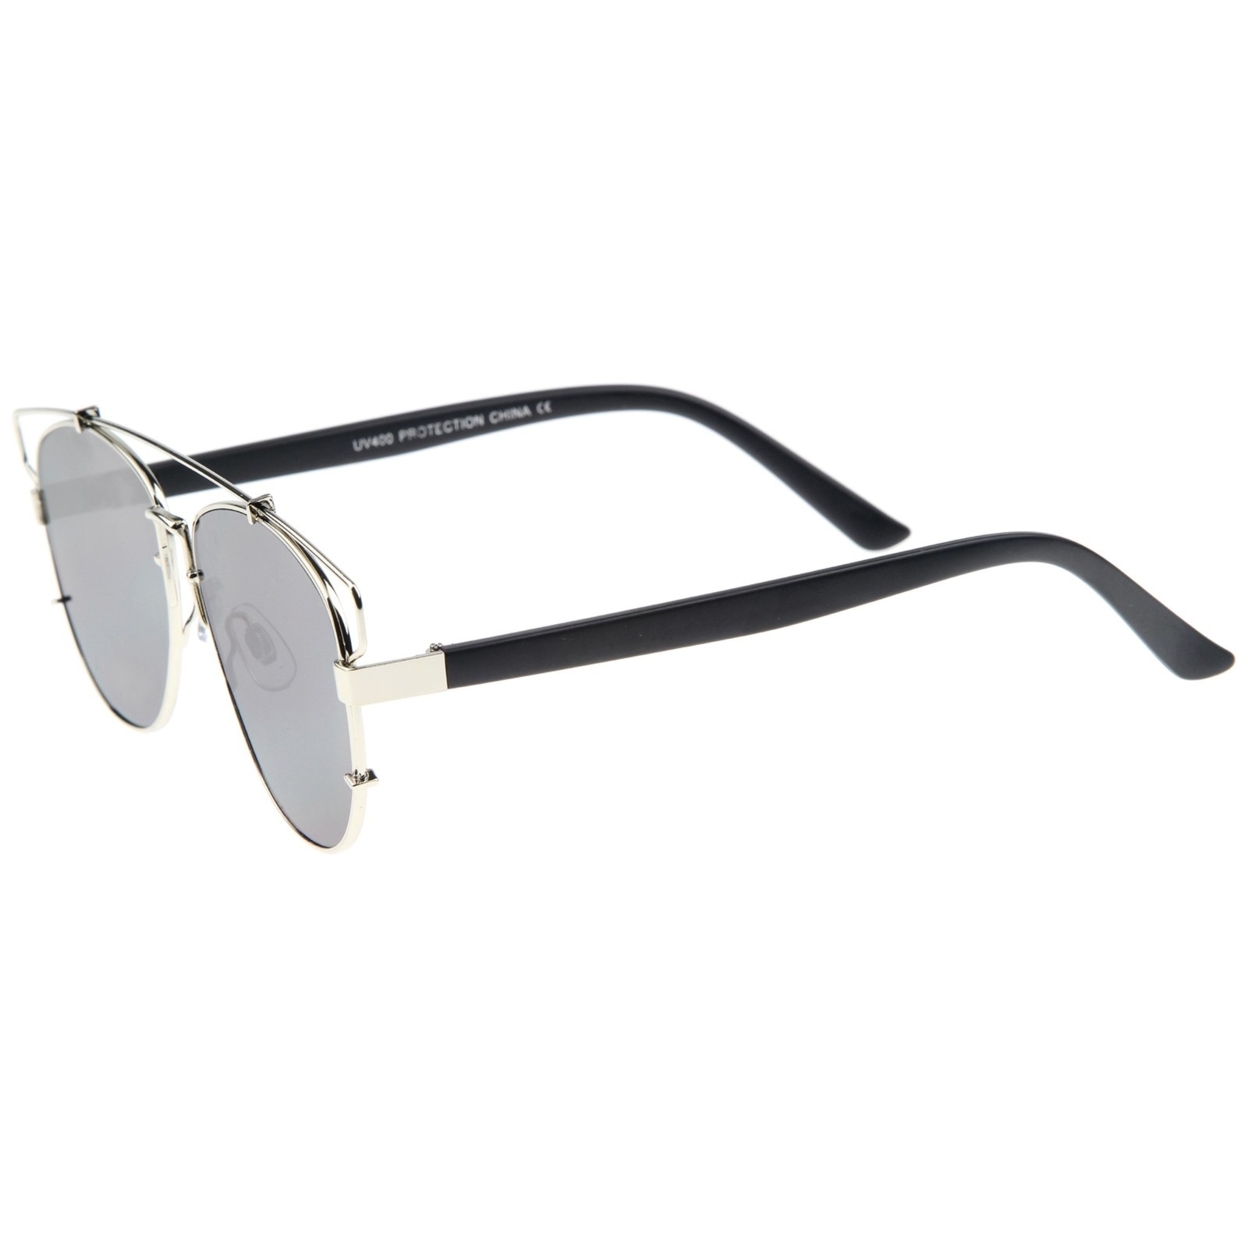 Modern Fashion Full Metal Crossbar Technologic Flat Lens Aviator Sunglasses 54mm - Gold-Black / Lavander Sunglasses